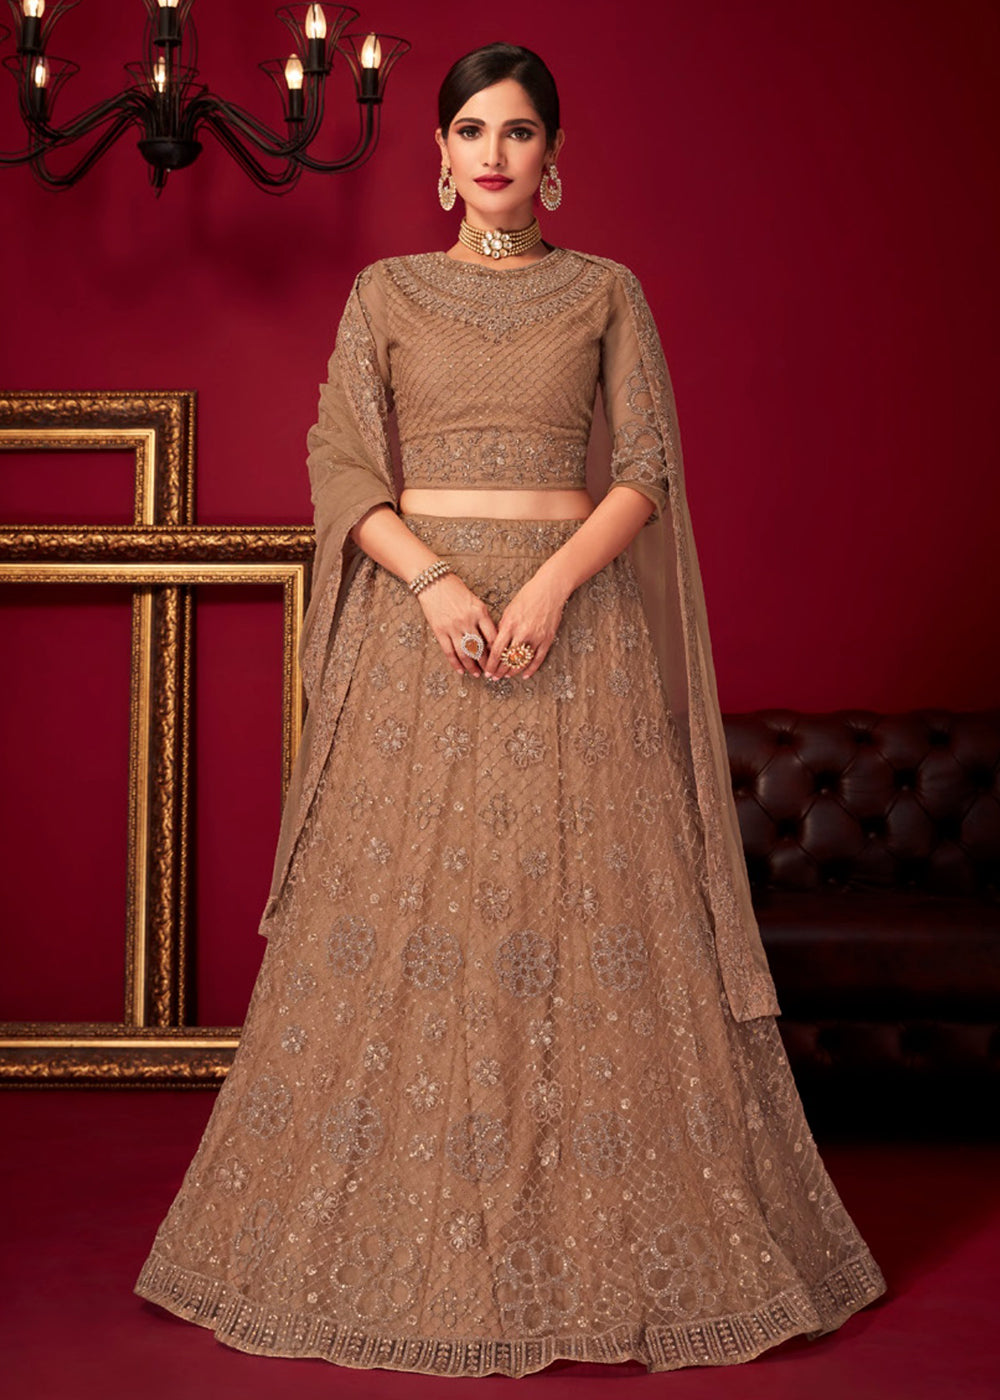 Buy Now Bridal Brown Resham & Stone Embroidered Wedding Lehenga Choli Online in USA, UK, Canada & Worldwide at Empress Clothing. 